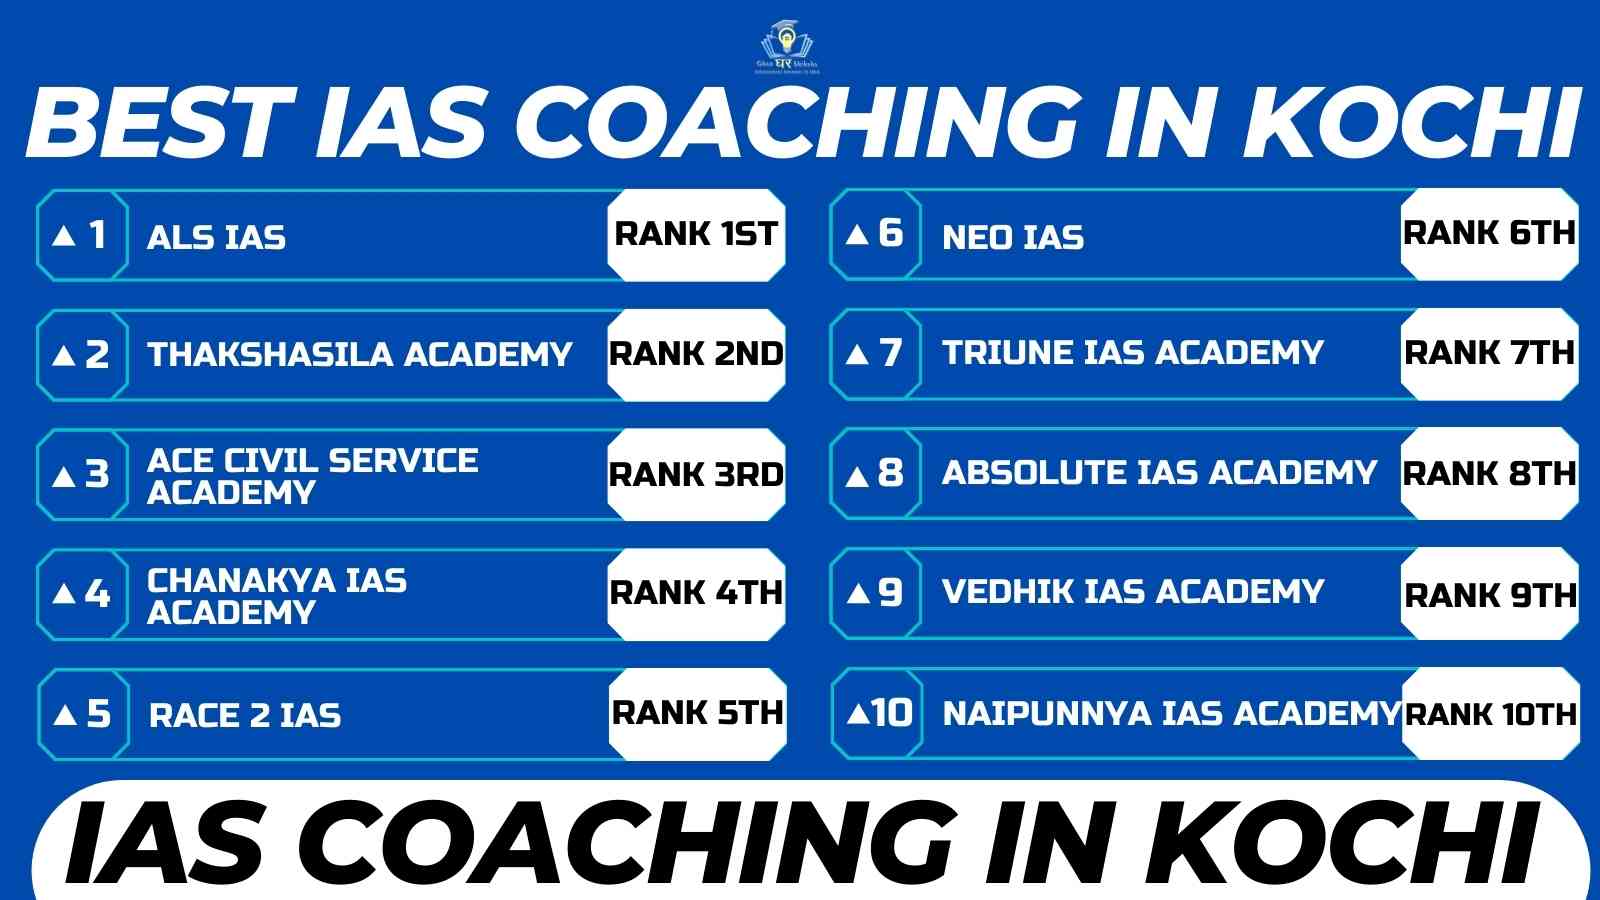 Best IAS Coaching Institute In Kochi